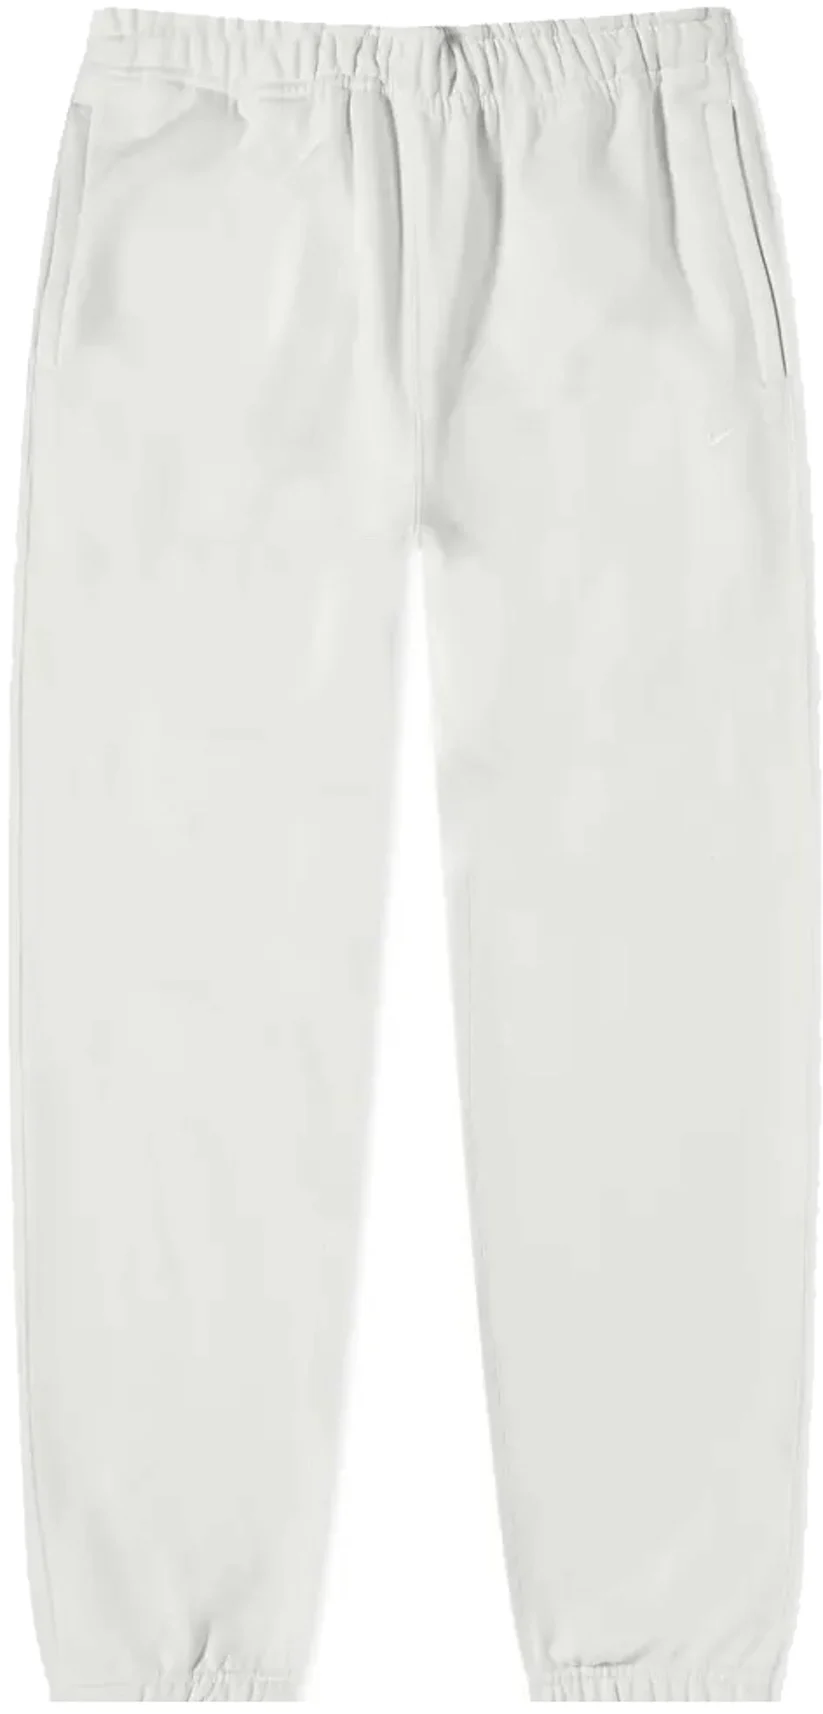 Nike Solo Swoosh Fleece Pants 'Midnight Navy/White